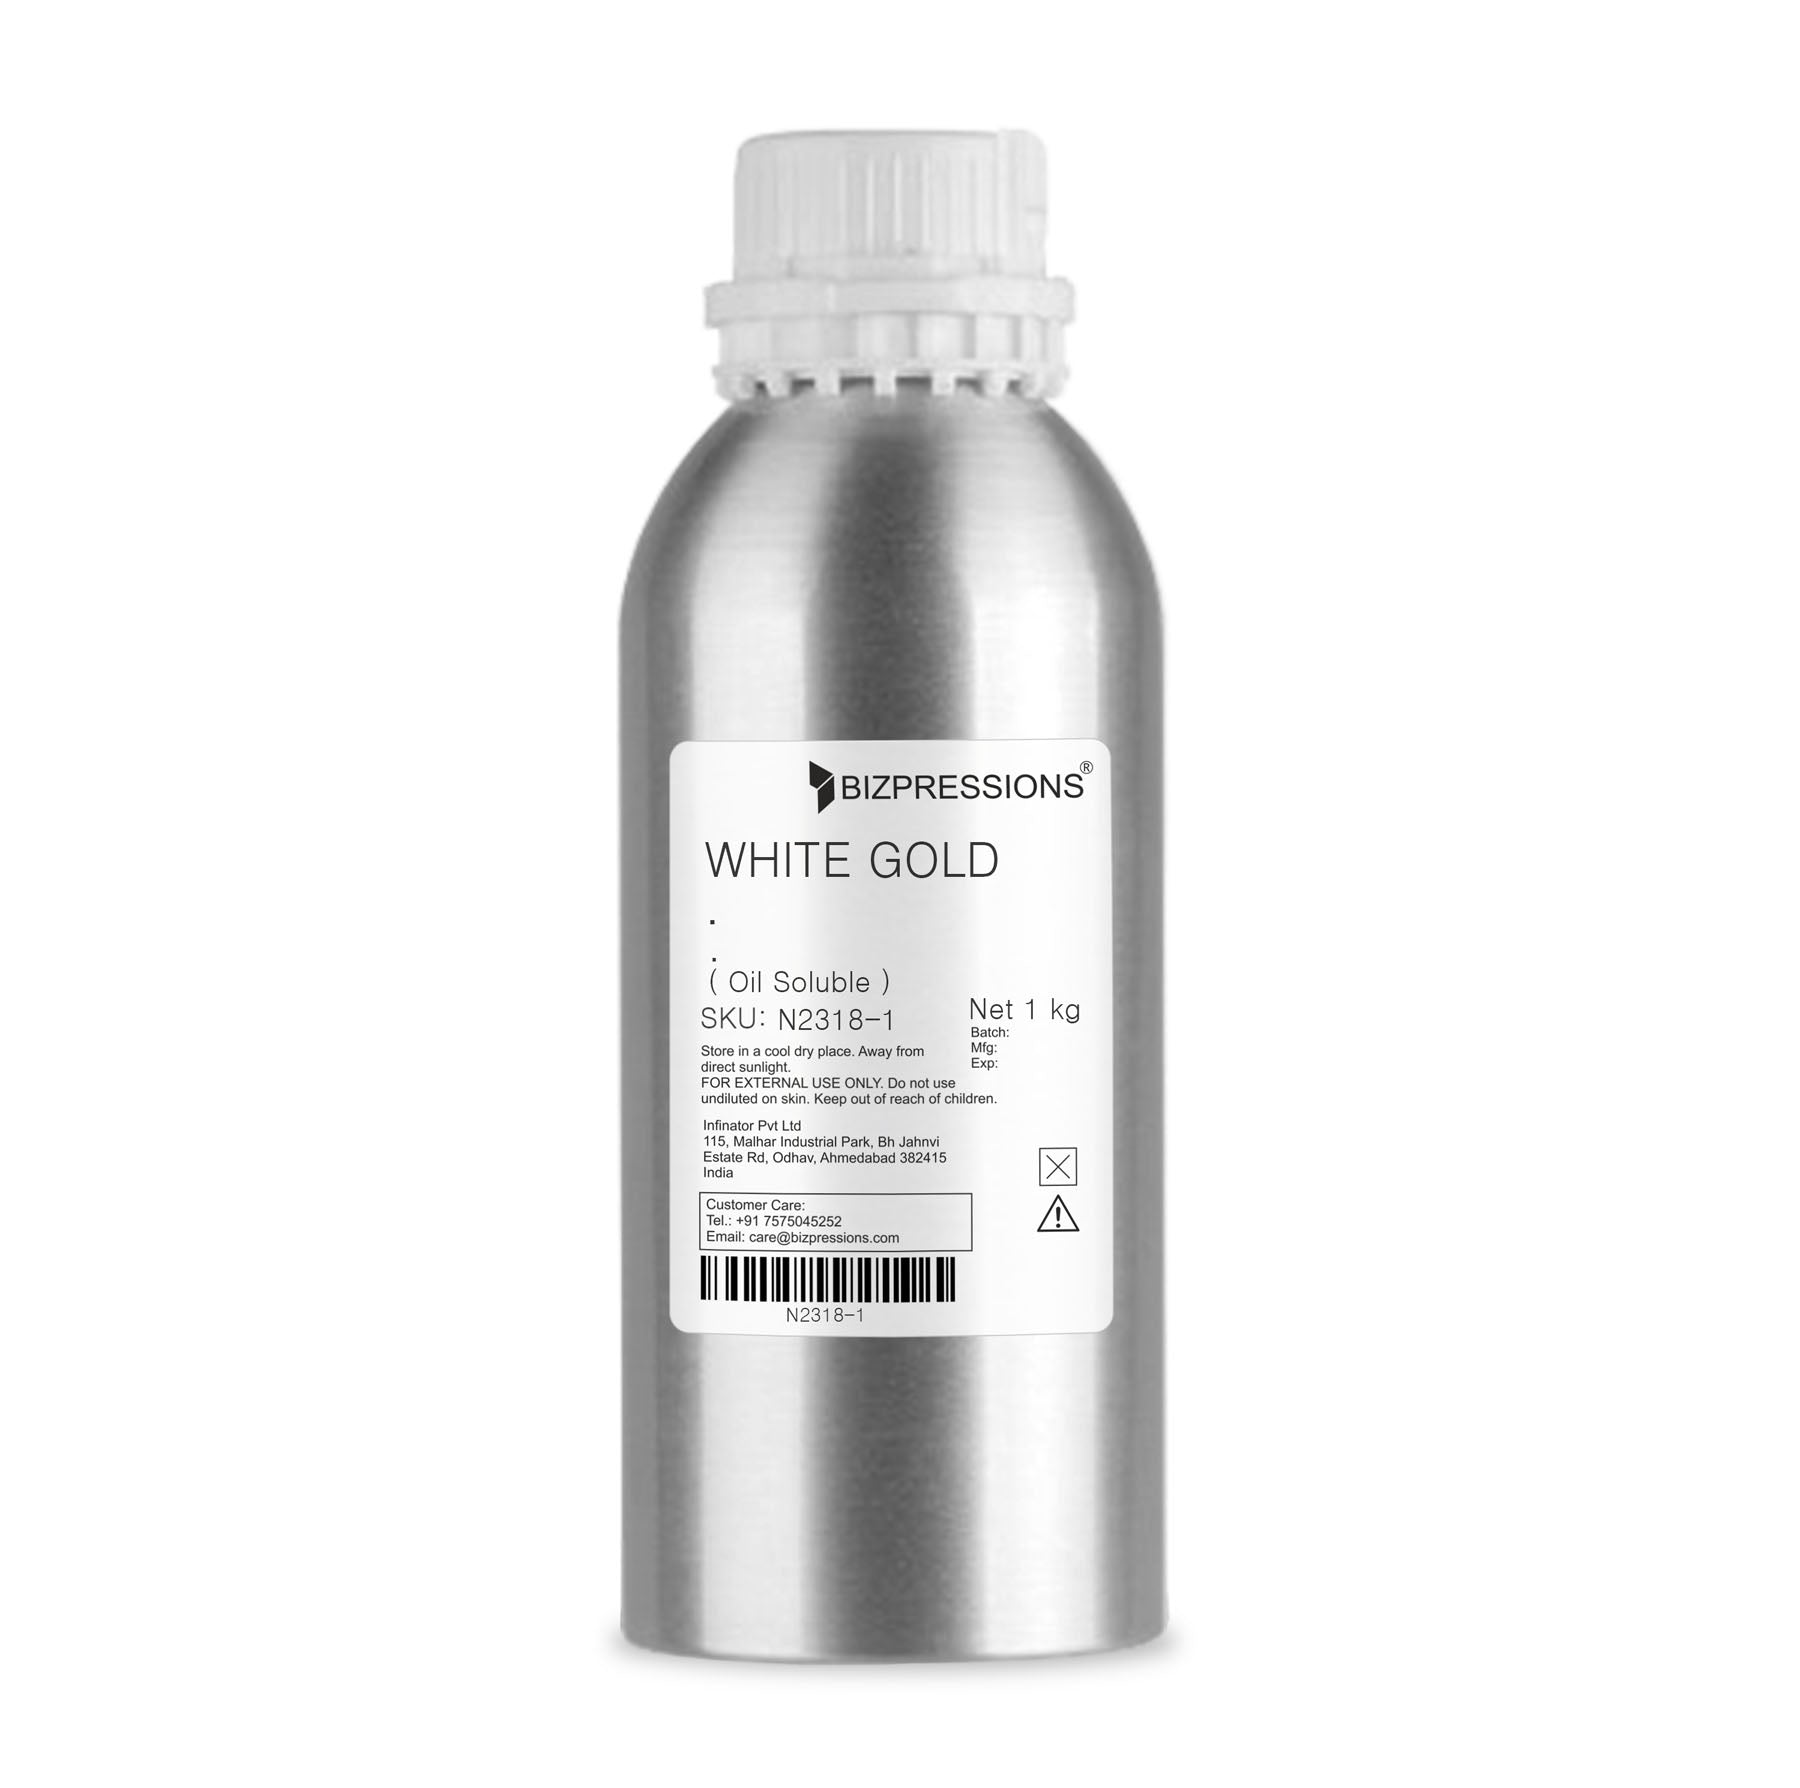 WHITE GOLD - Fragrance ( Oil Soluble )